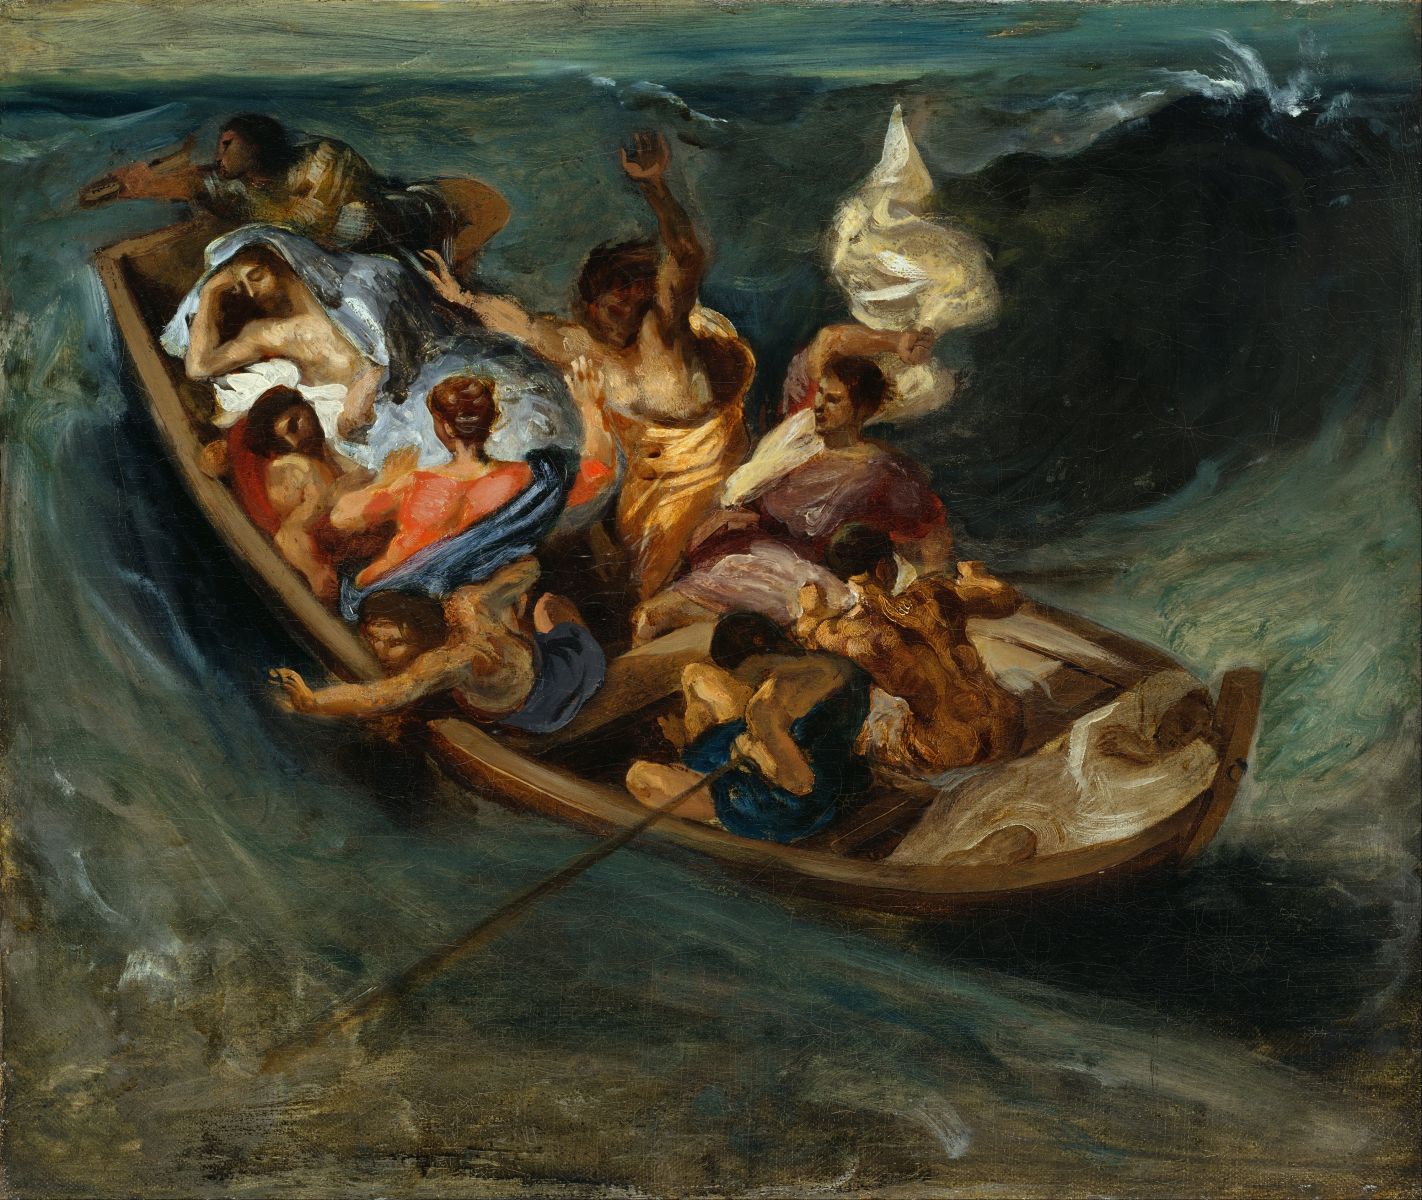 Christ on the Lake of Gennezaret, Eugène Delacroix, 1854